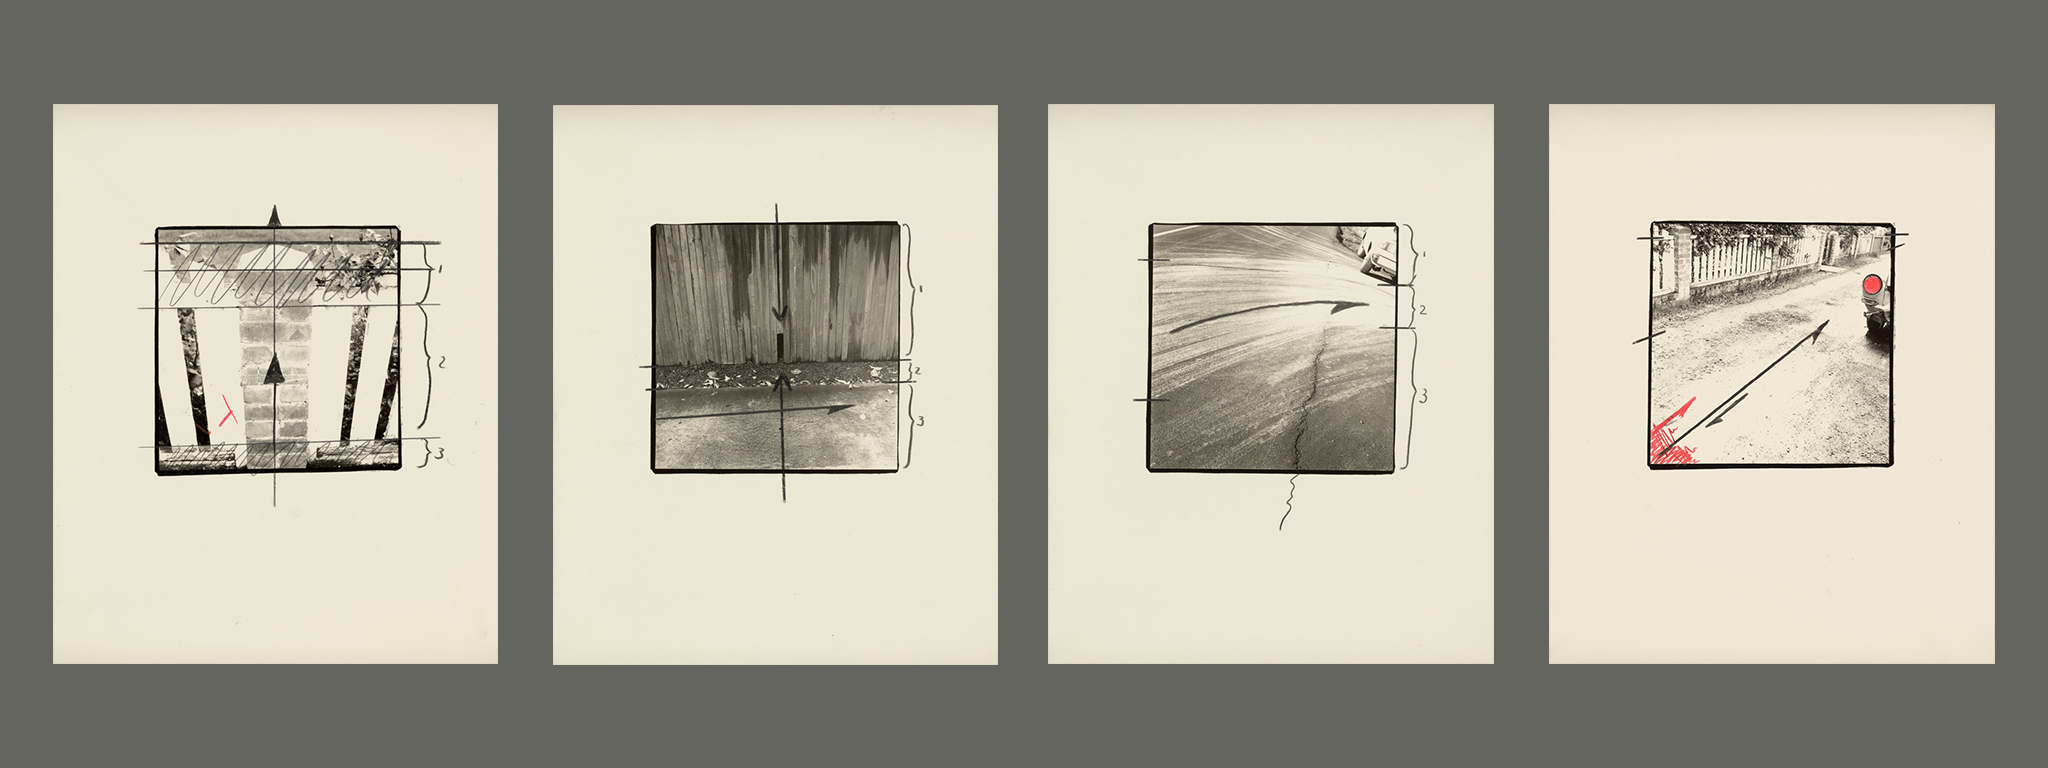 Untitled (Outside the Frame #6), Untitled (Outside the Frame #7), Untitled (Outside the Frame #8), Untitled (Outside the Frame #9), 1981-1982, Uta Barth, gelatin silver prints. The J. Paul Getty Museum. © Uta Barth